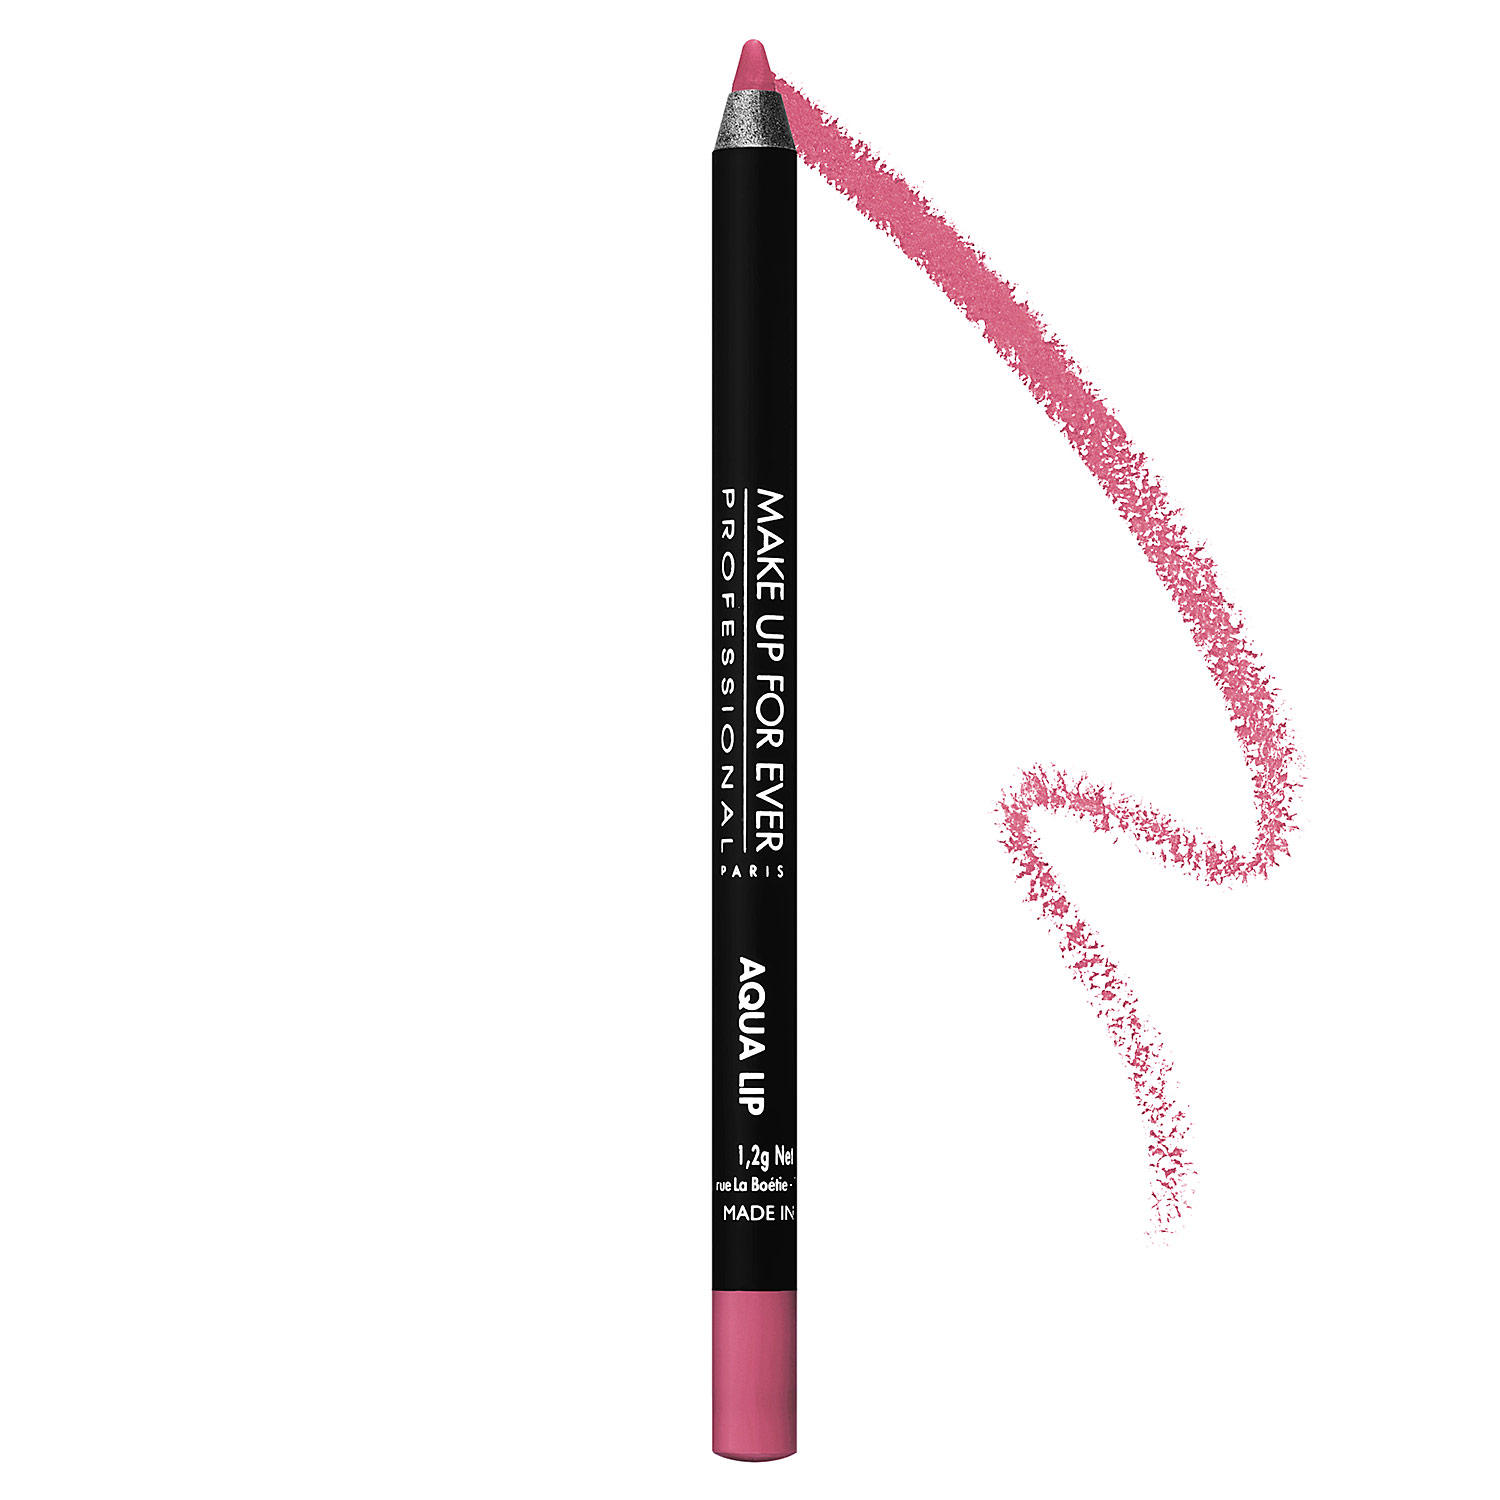 Makeup Forever Aqua Lip Waterproof Lipliner Pencil Vibrant Pink 15C